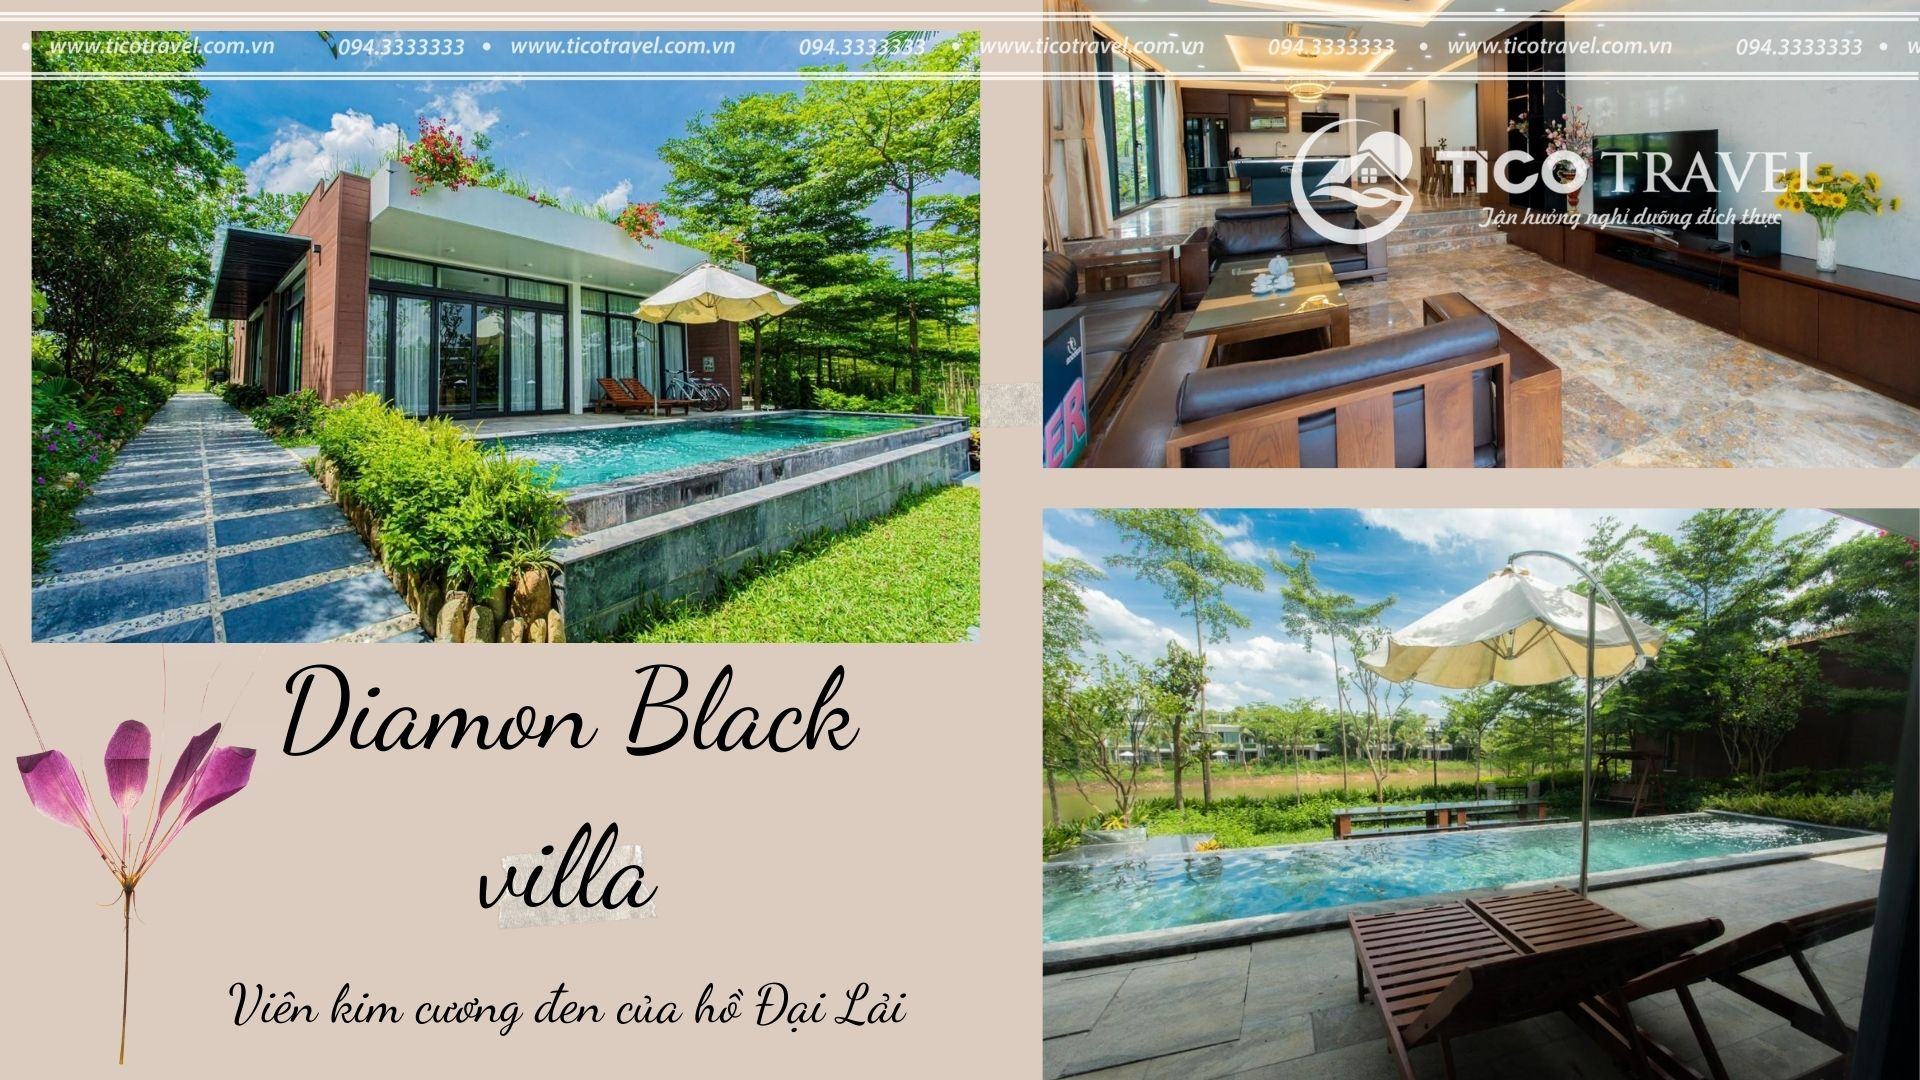 Villa Dinamon Black Flamingo Đại Lải 